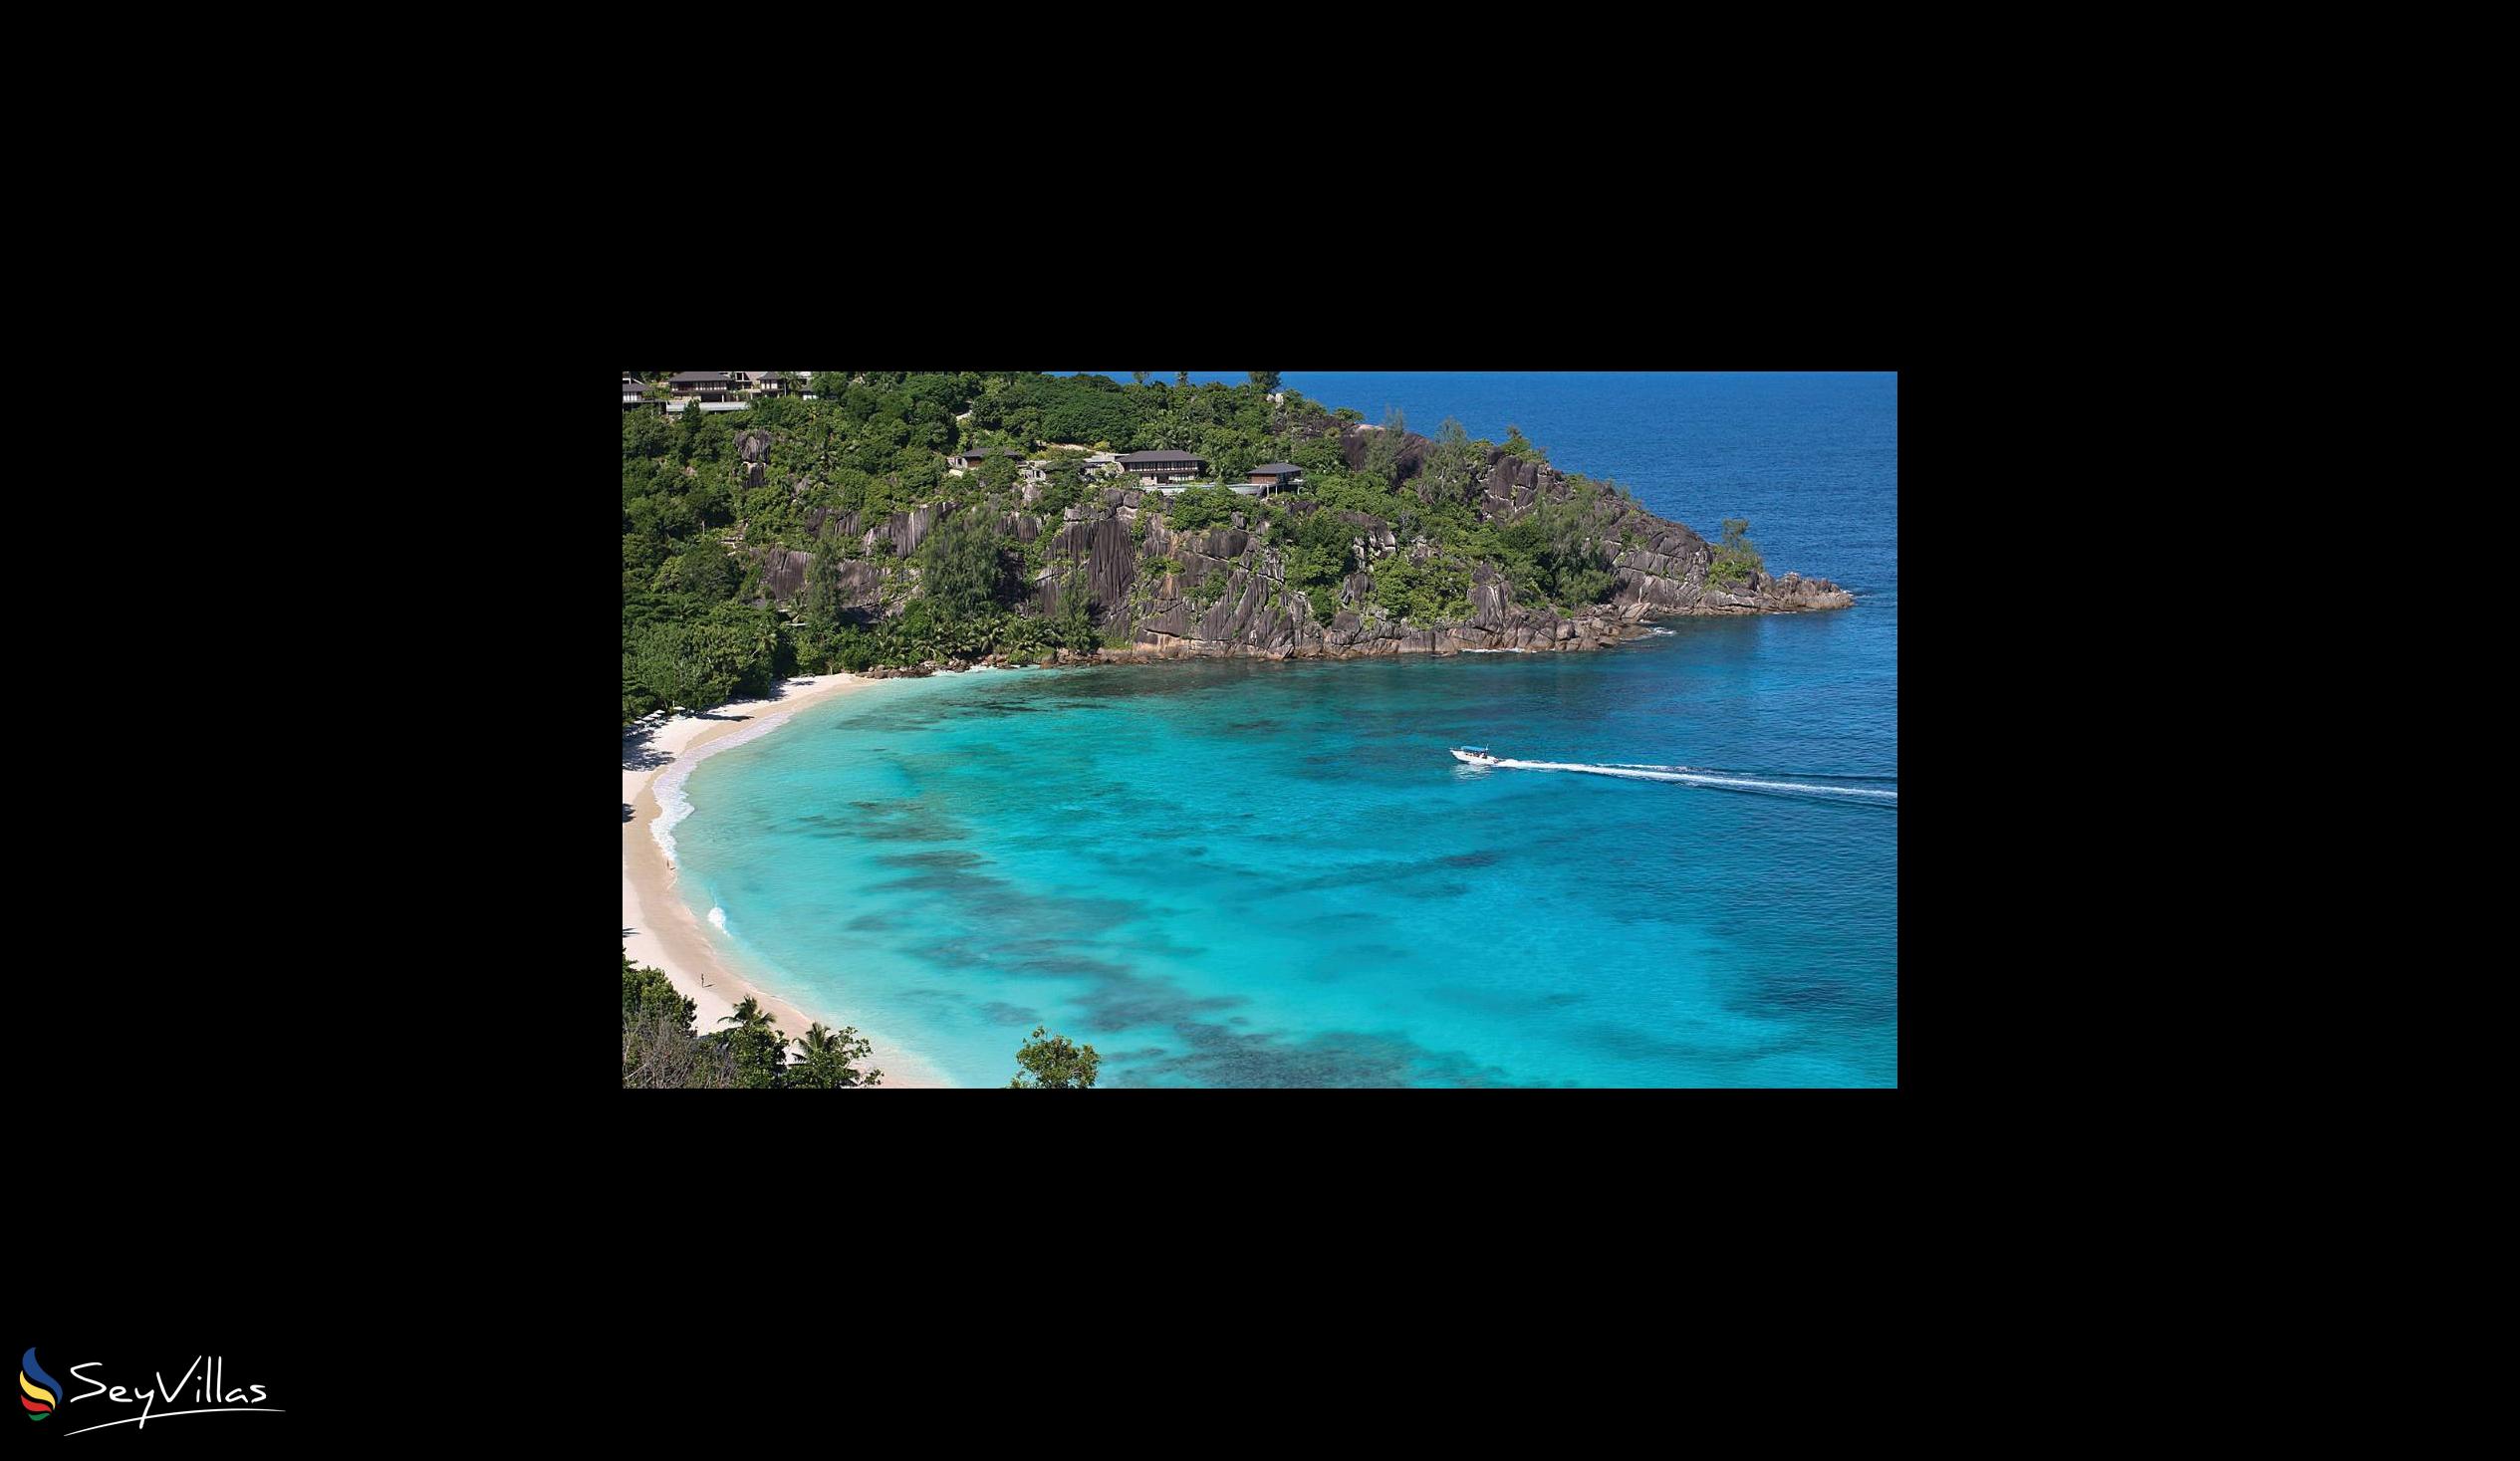 Photo 43: Four Seasons Resort - Location - Mahé (Seychelles)